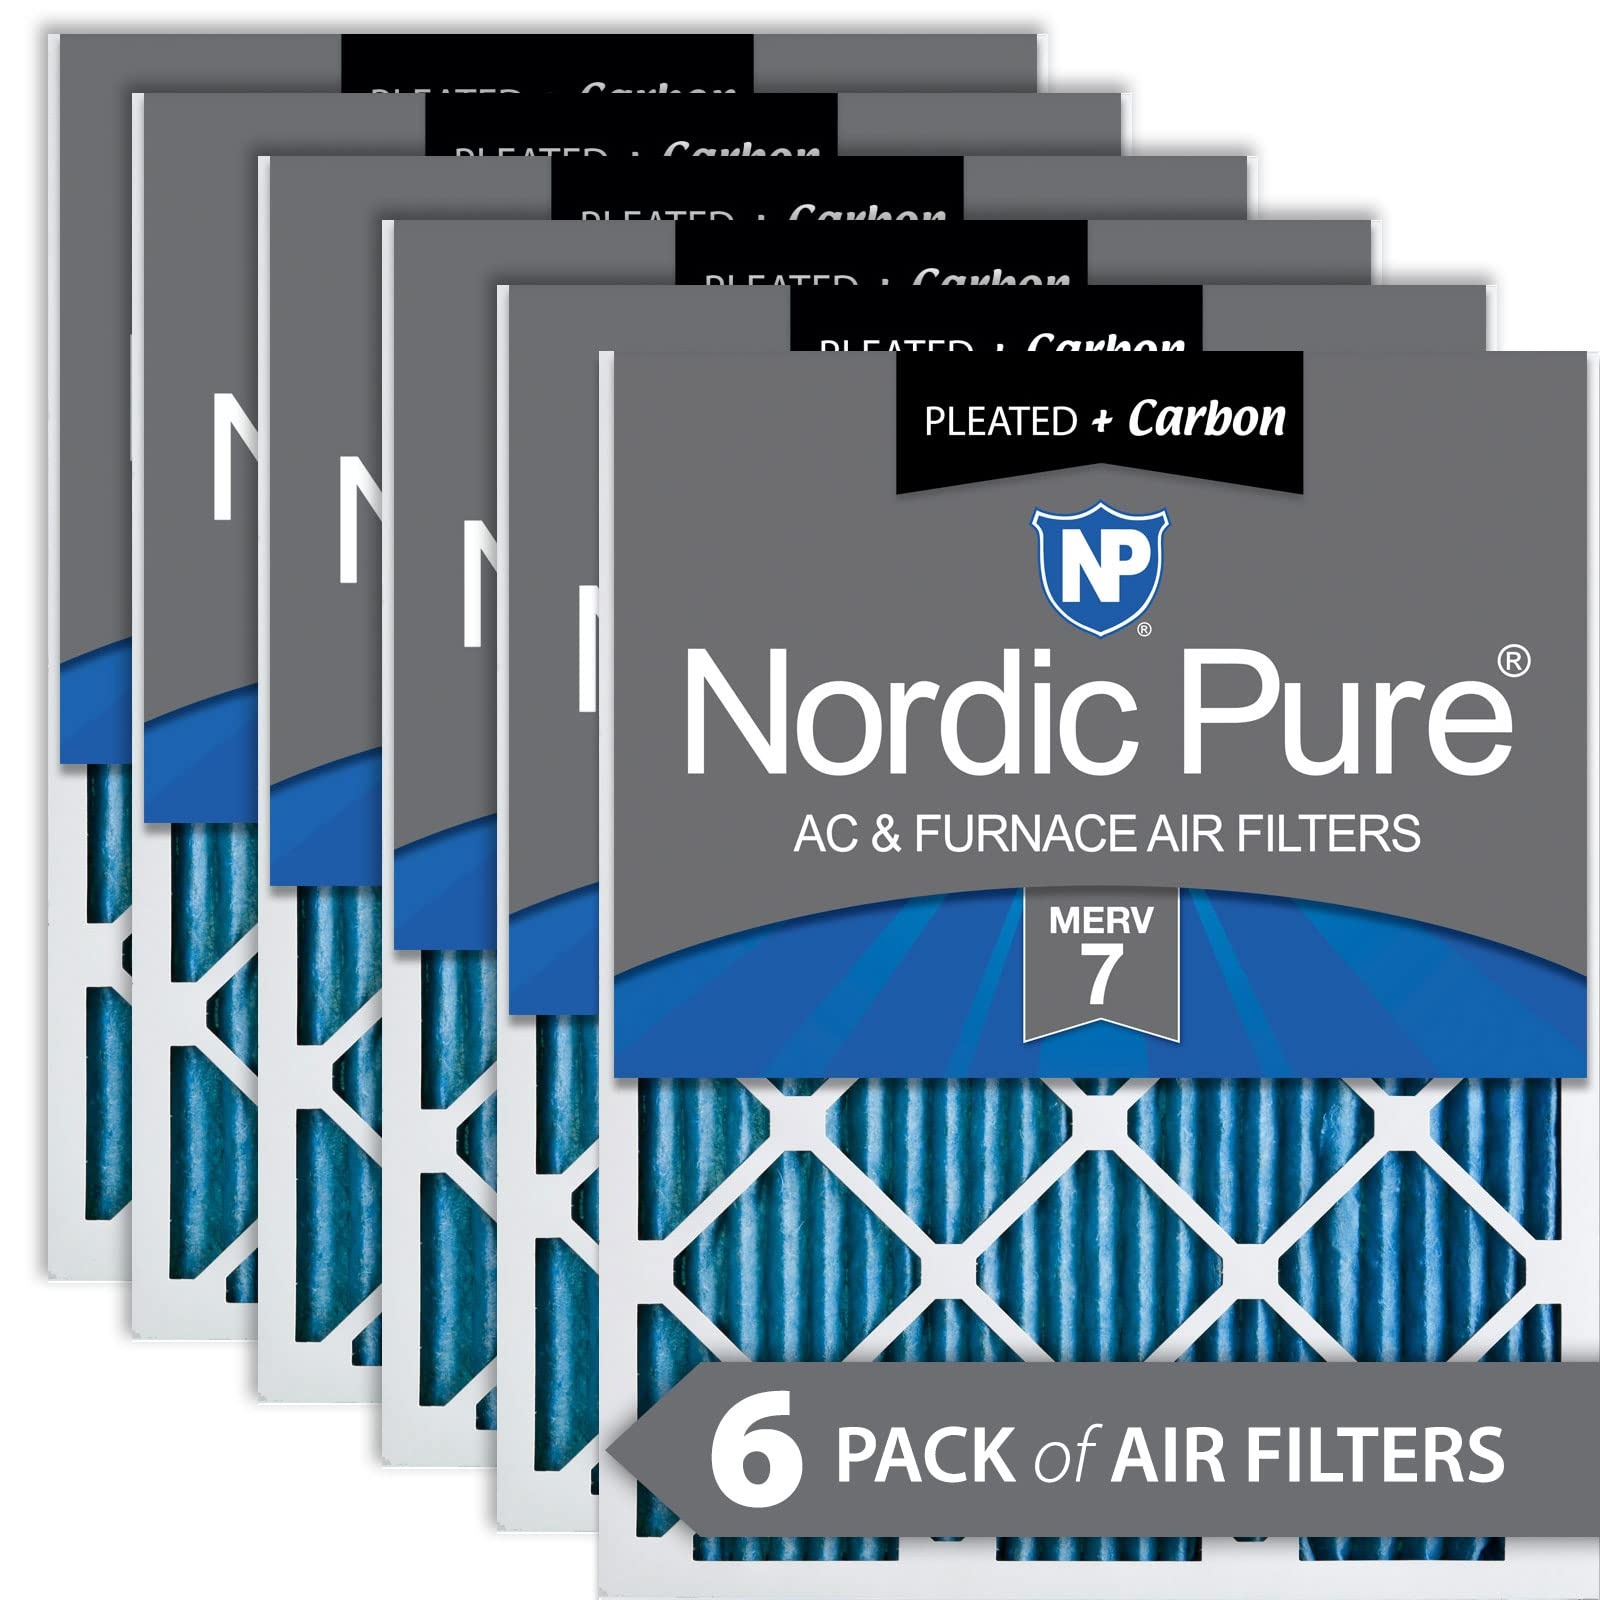 Nordic Pure MERV 7 Plus Carbon AC Ofen-Luftfilter, 20 x 25 x 1, 6 Stück